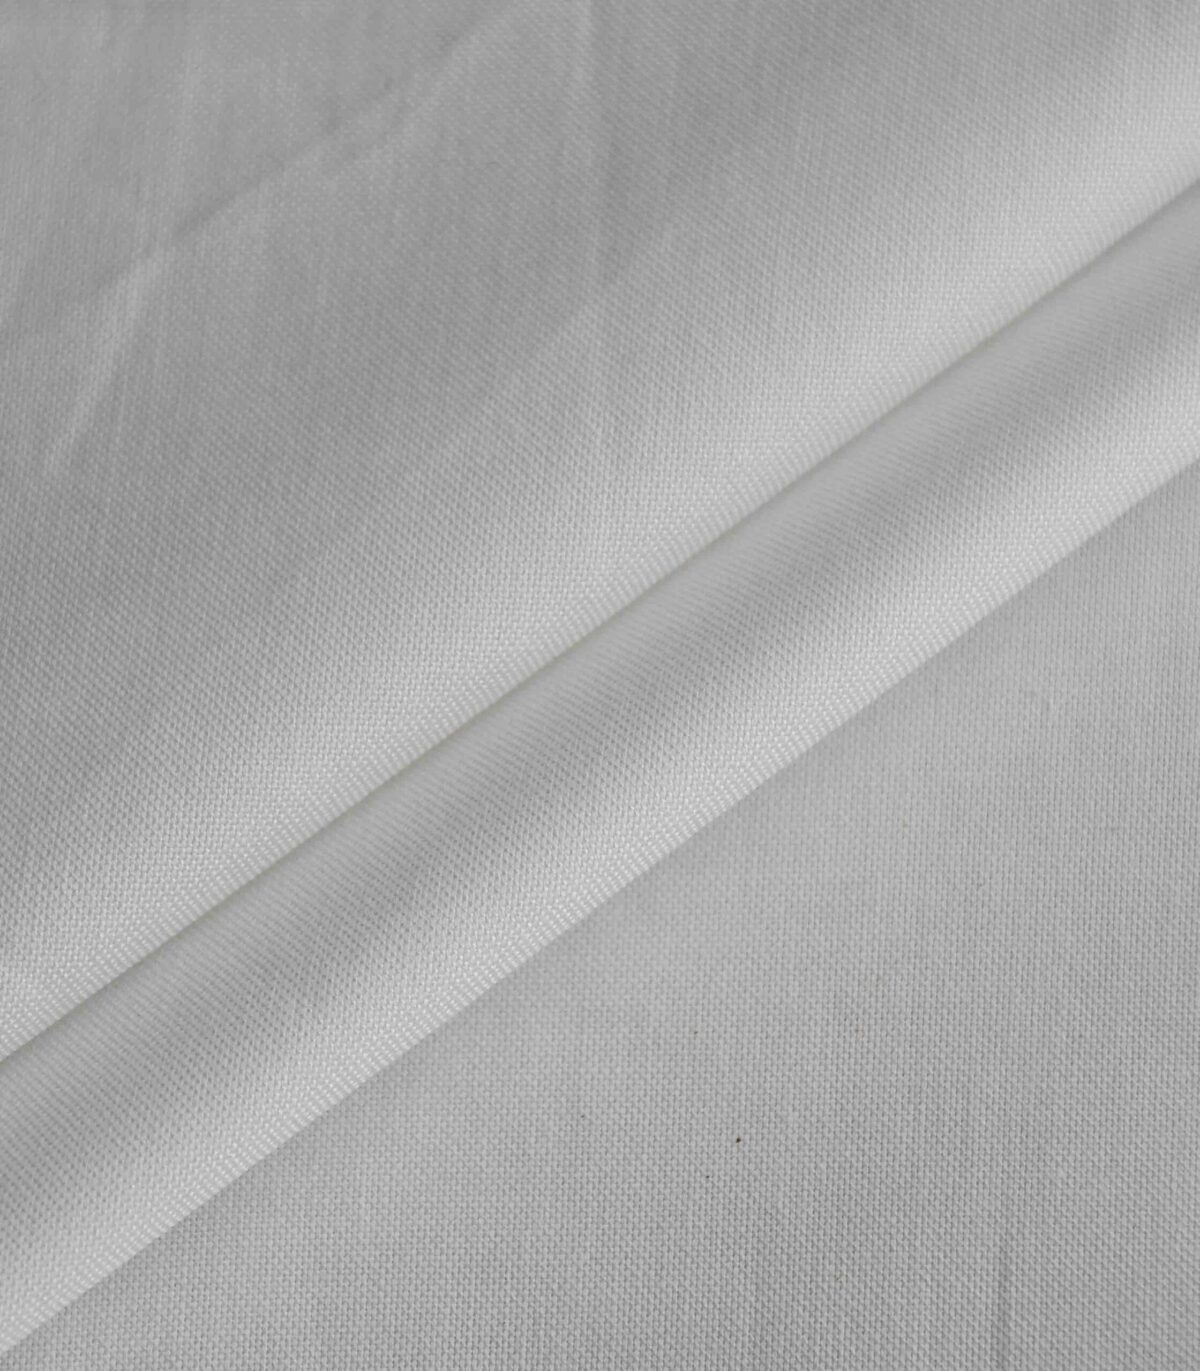 Oxford RFD Cotton Fabric